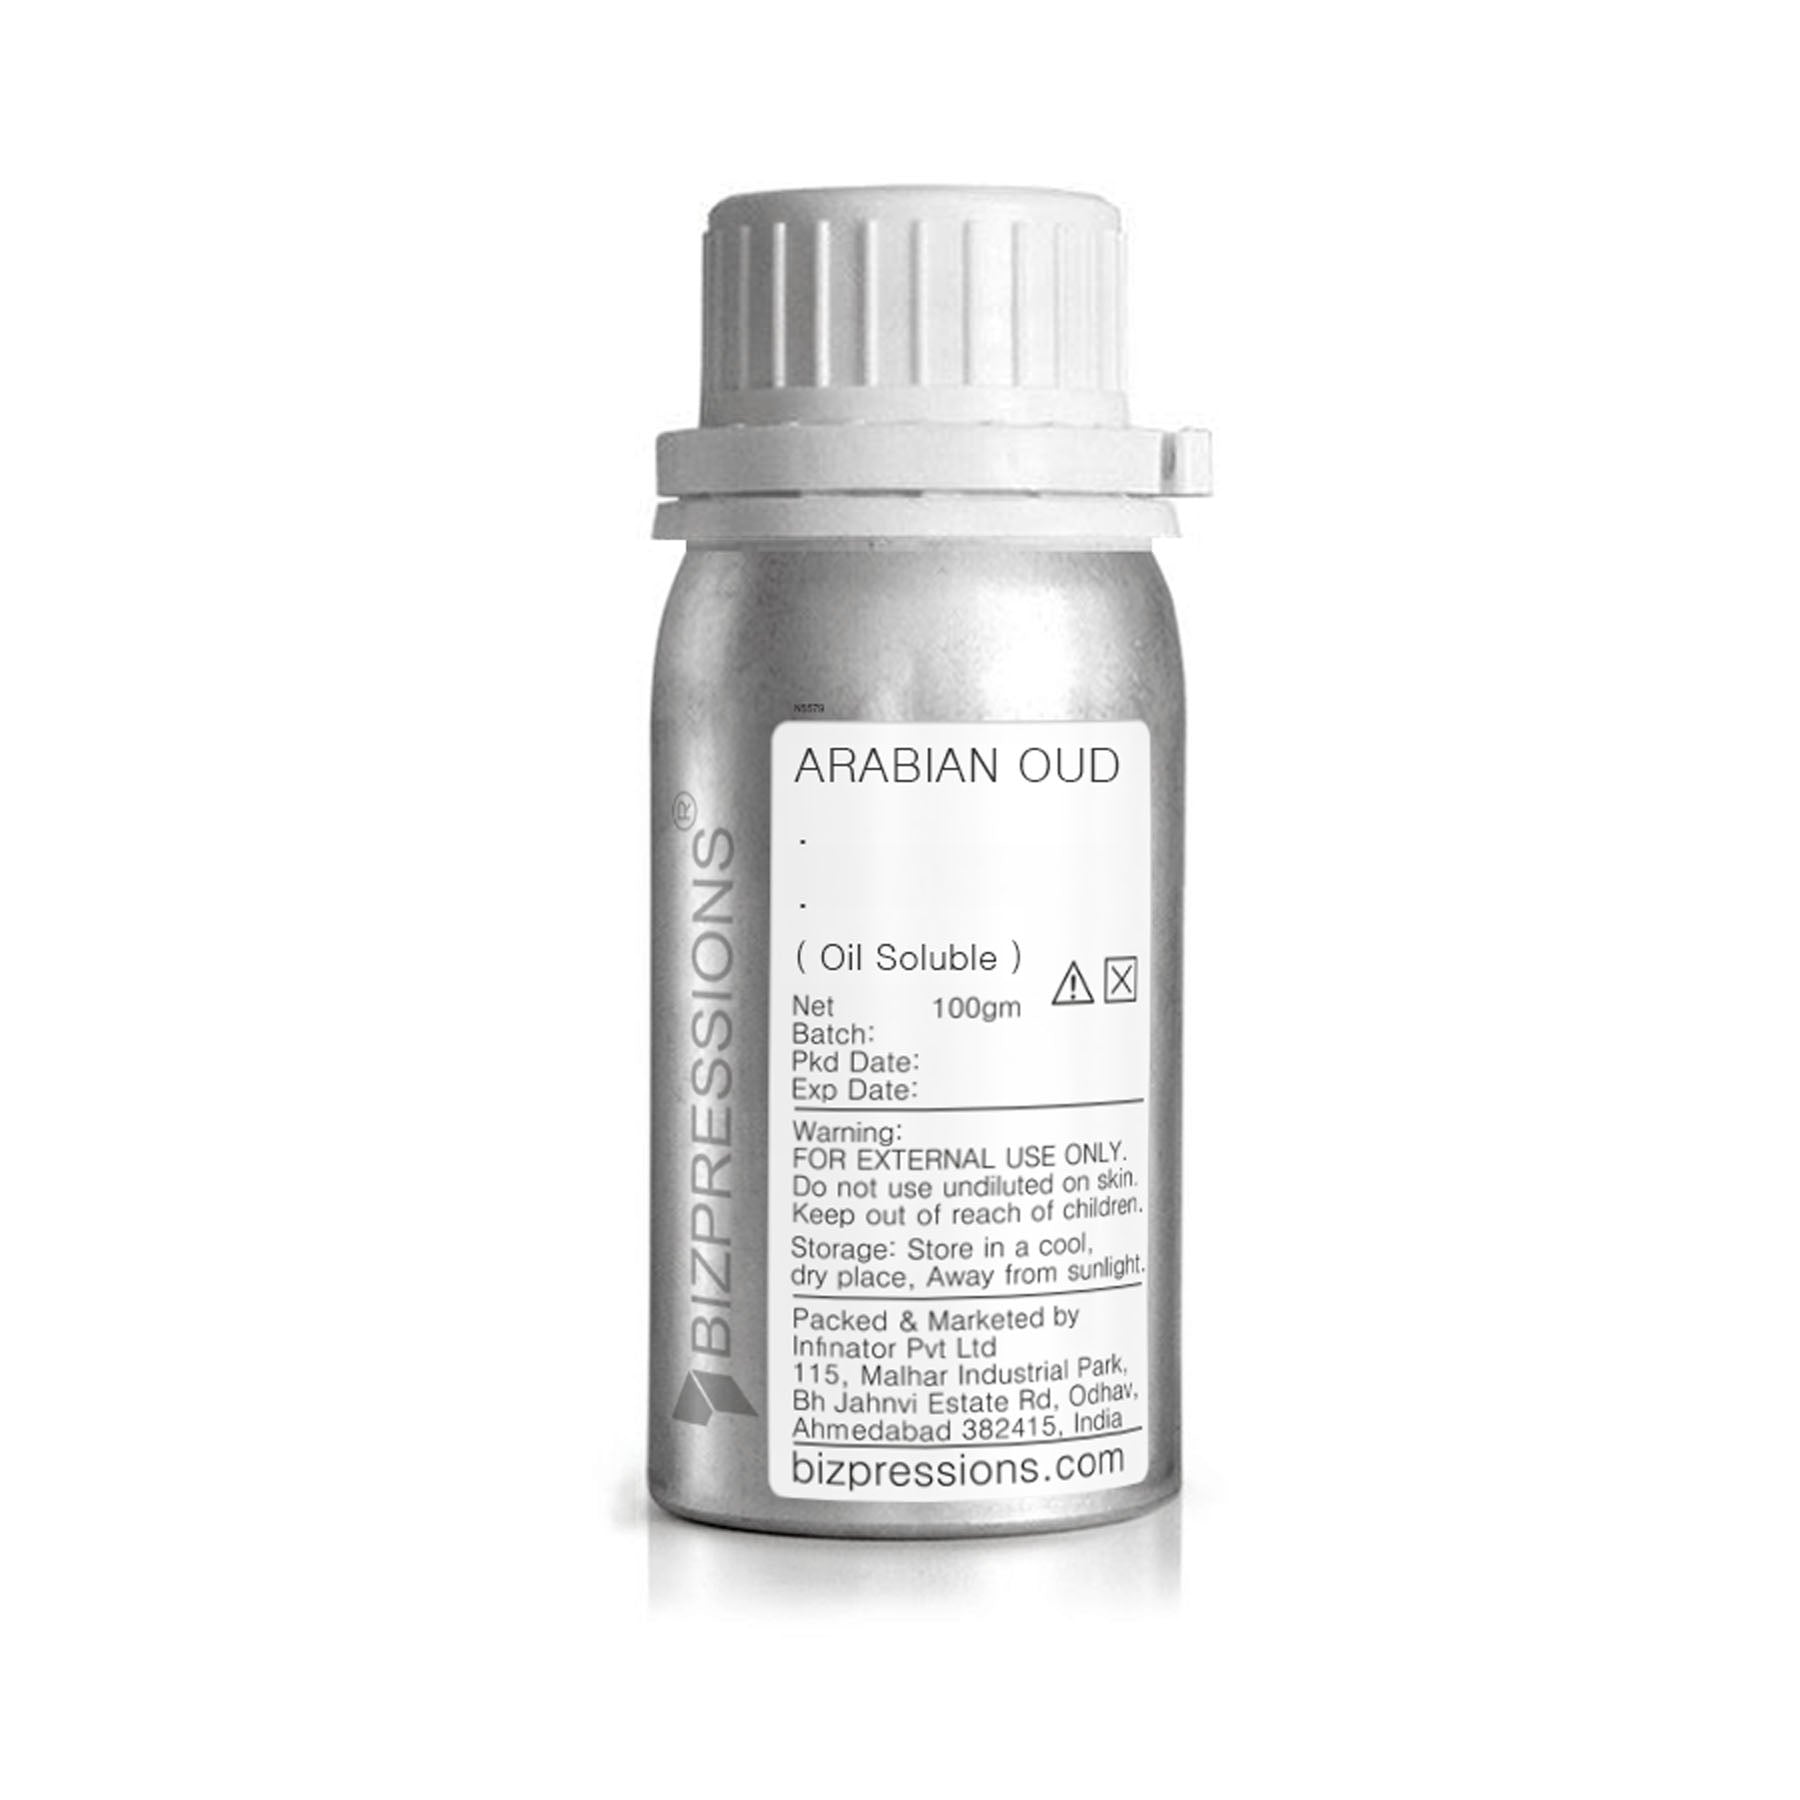 ARABIAN OUD - Fragrance ( Oil Soluble ) - 100 gm